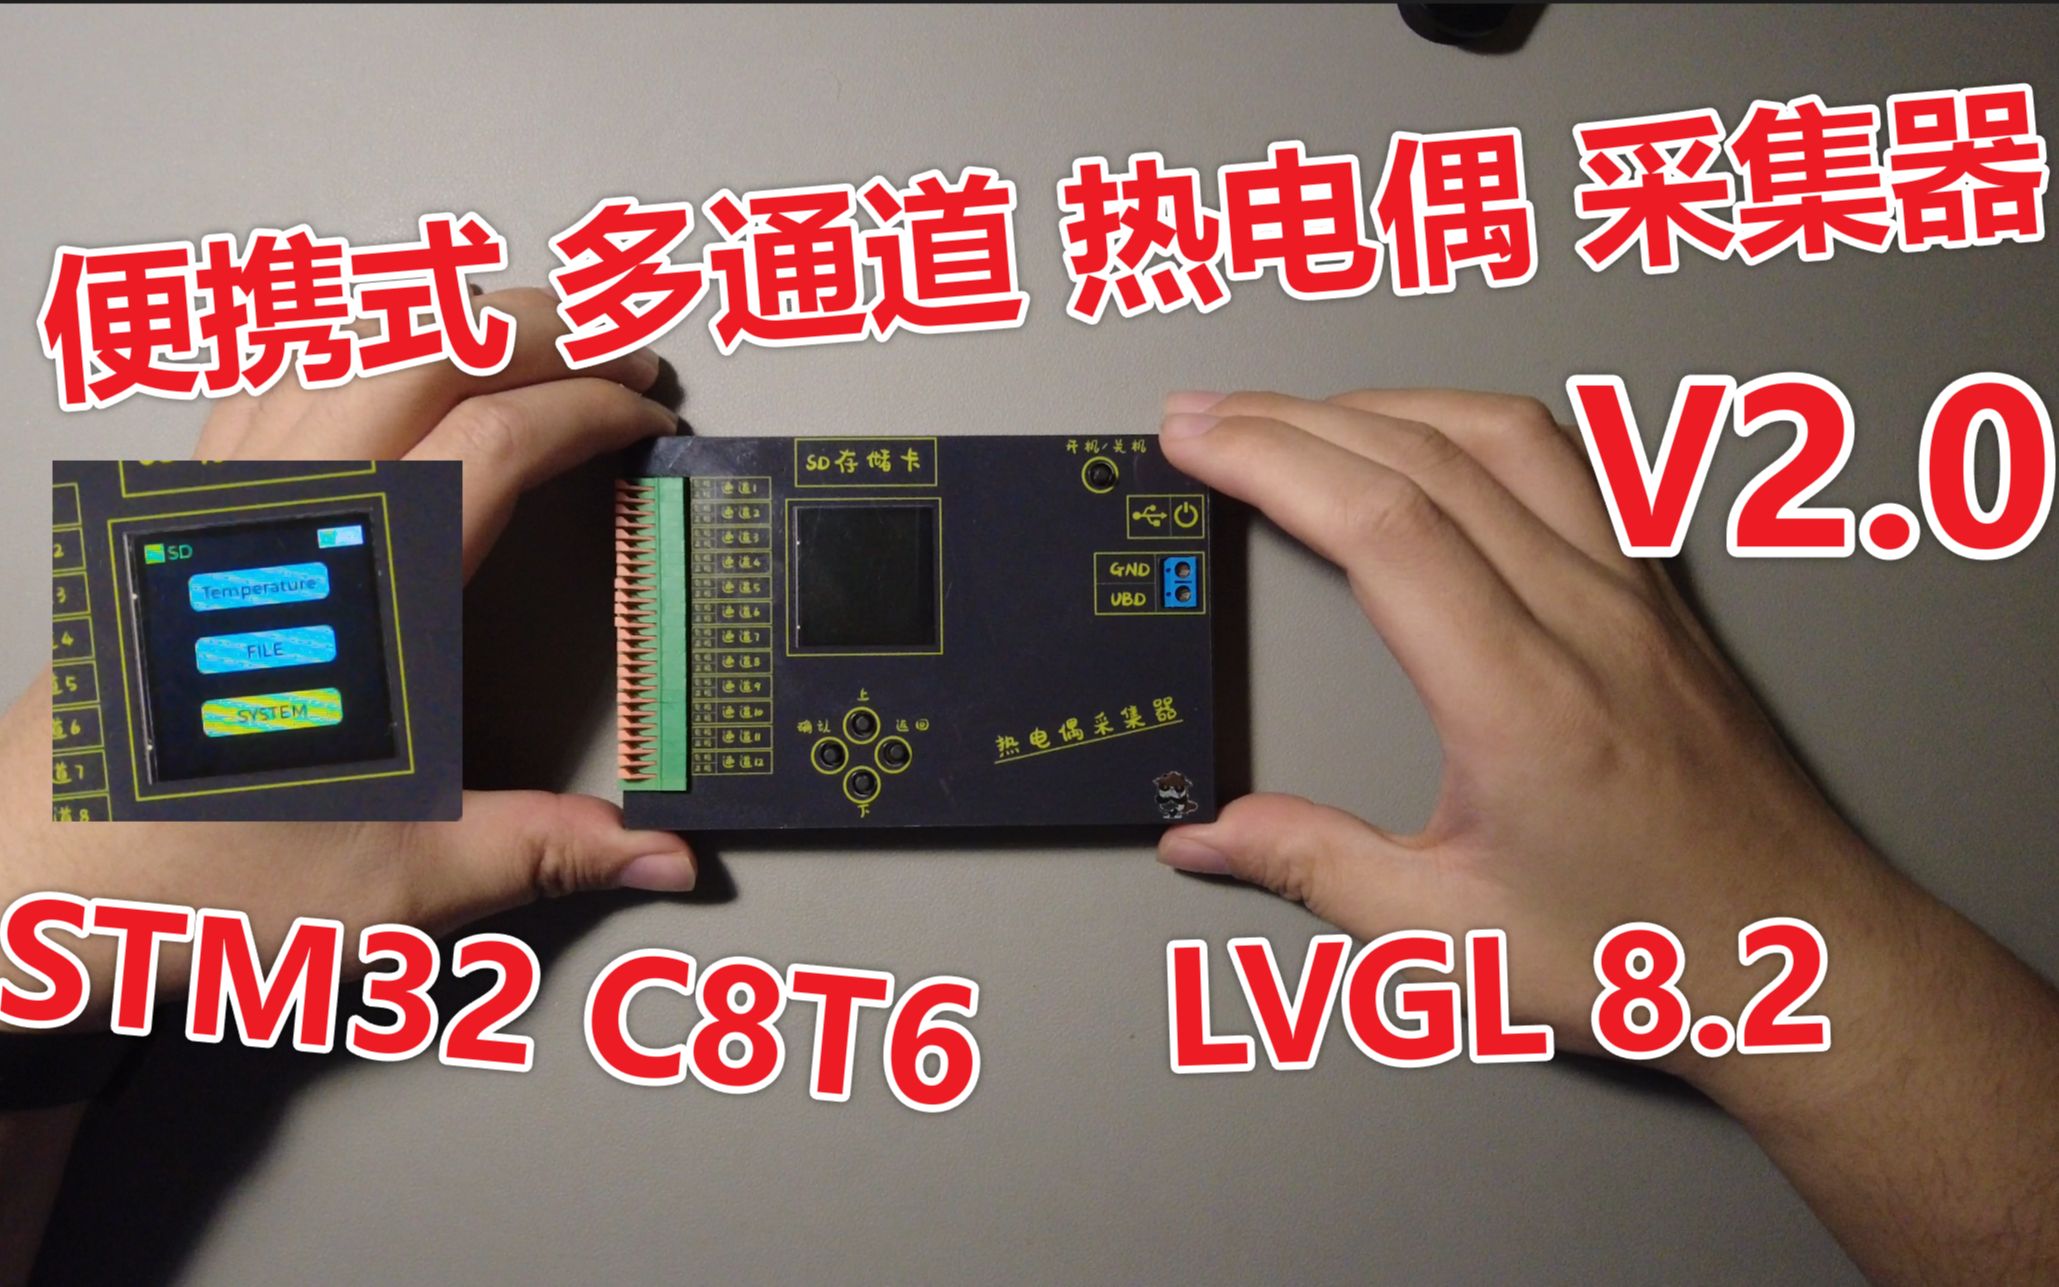 【自制】C8T6运行LVGL8.2 榨干MCU资源的 DIY便携式多通道热电偶采集器